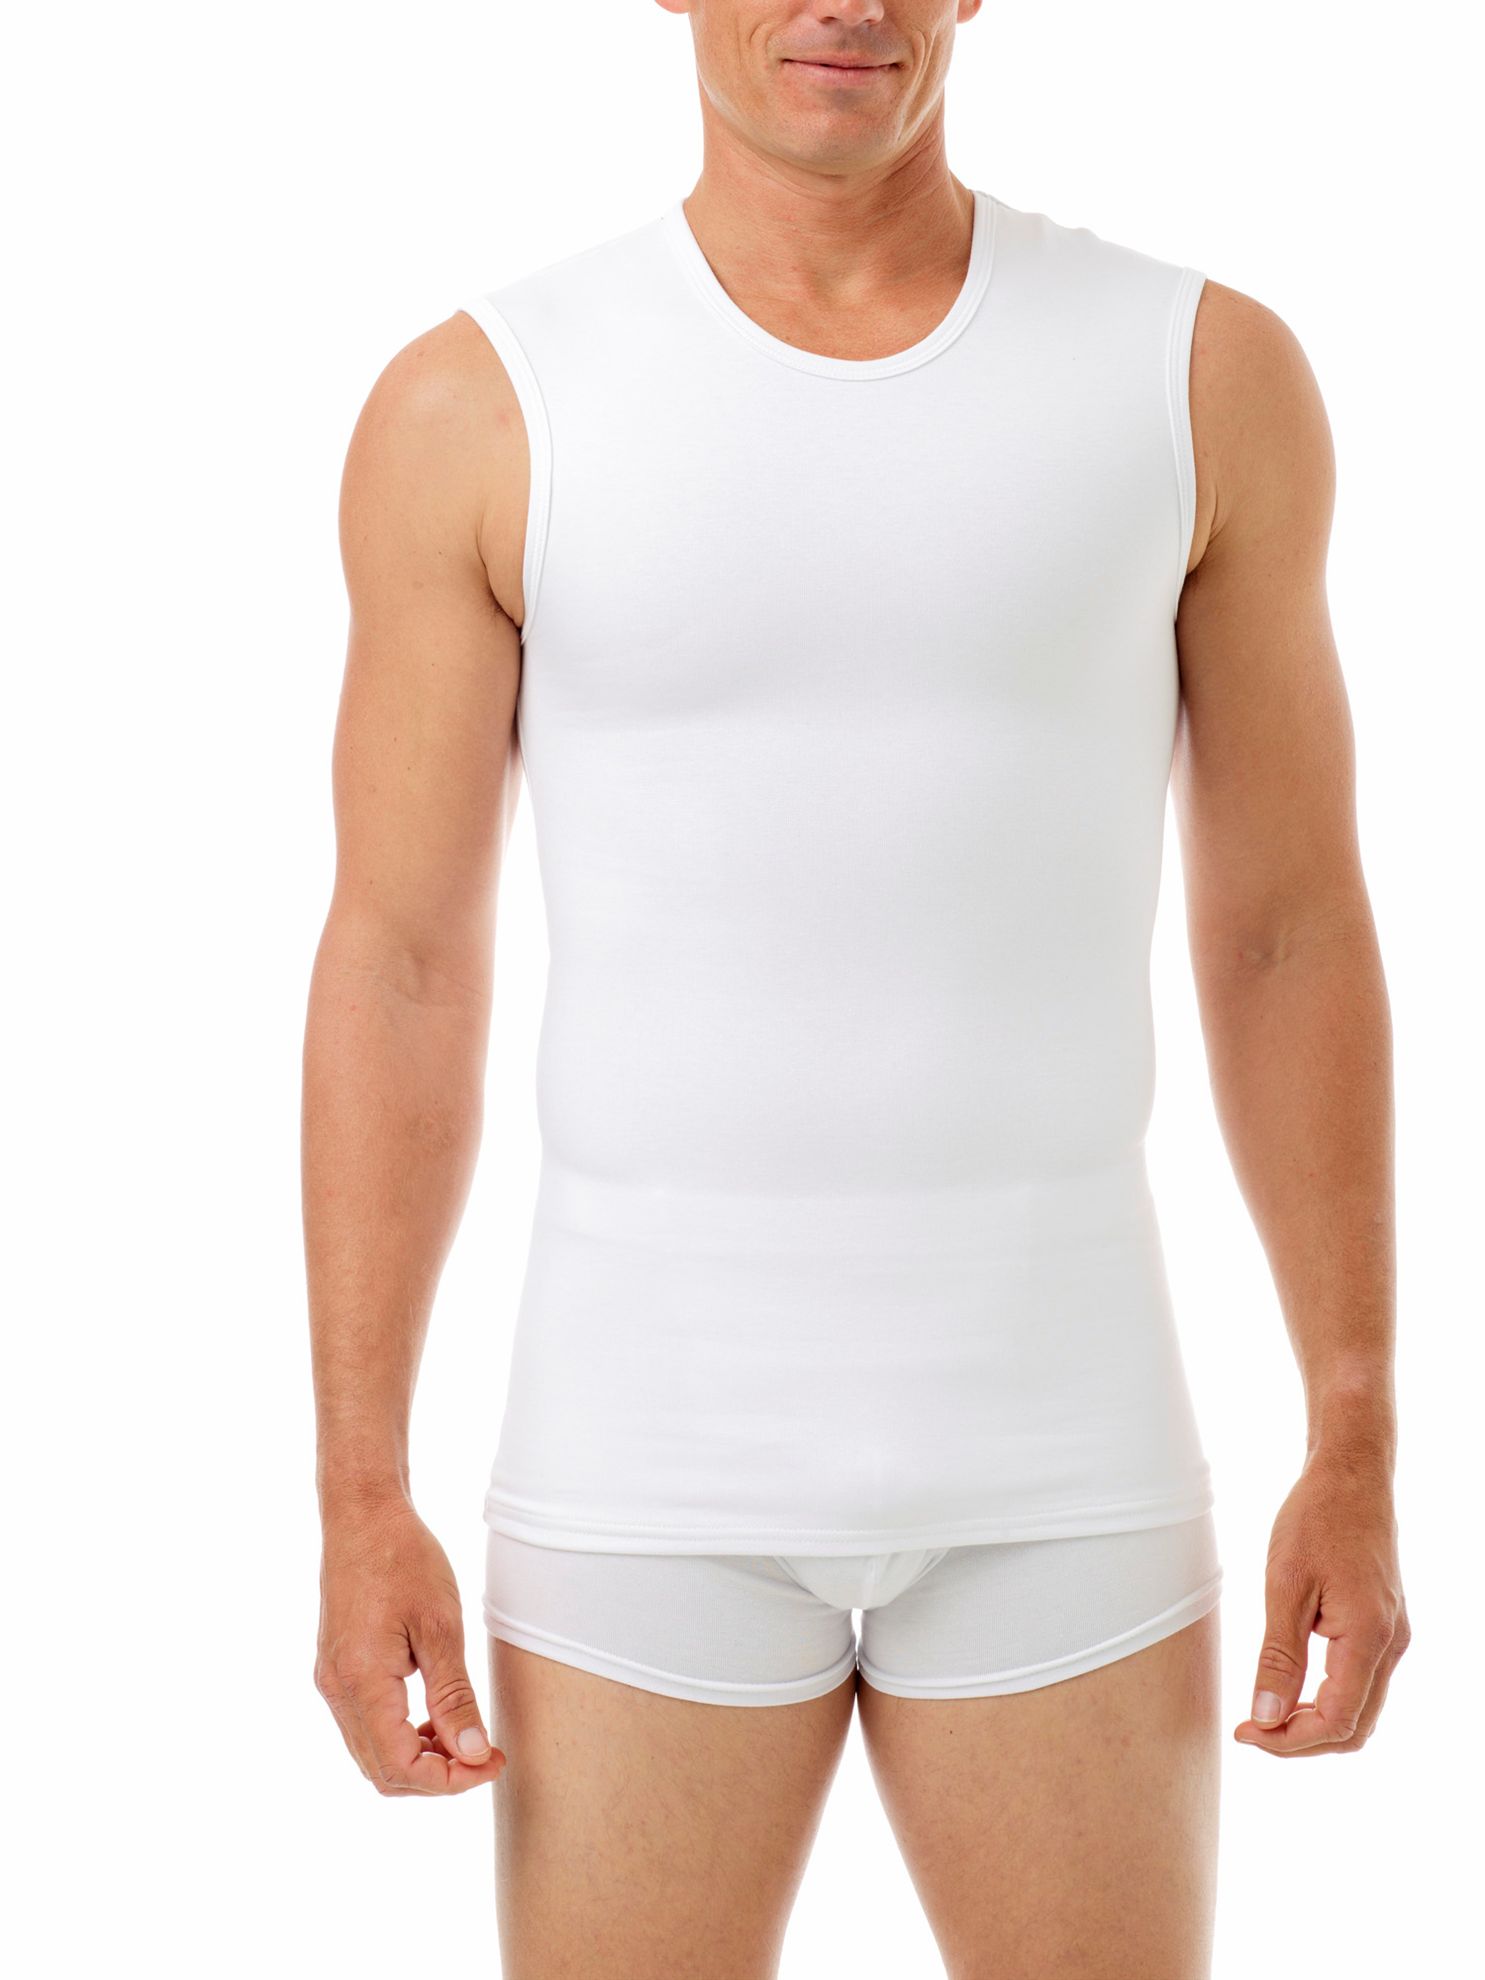 https://www.underworks.com/images/thumbs/0000241_mens-cotton-concealer-compression-muscle-shirt.jpeg